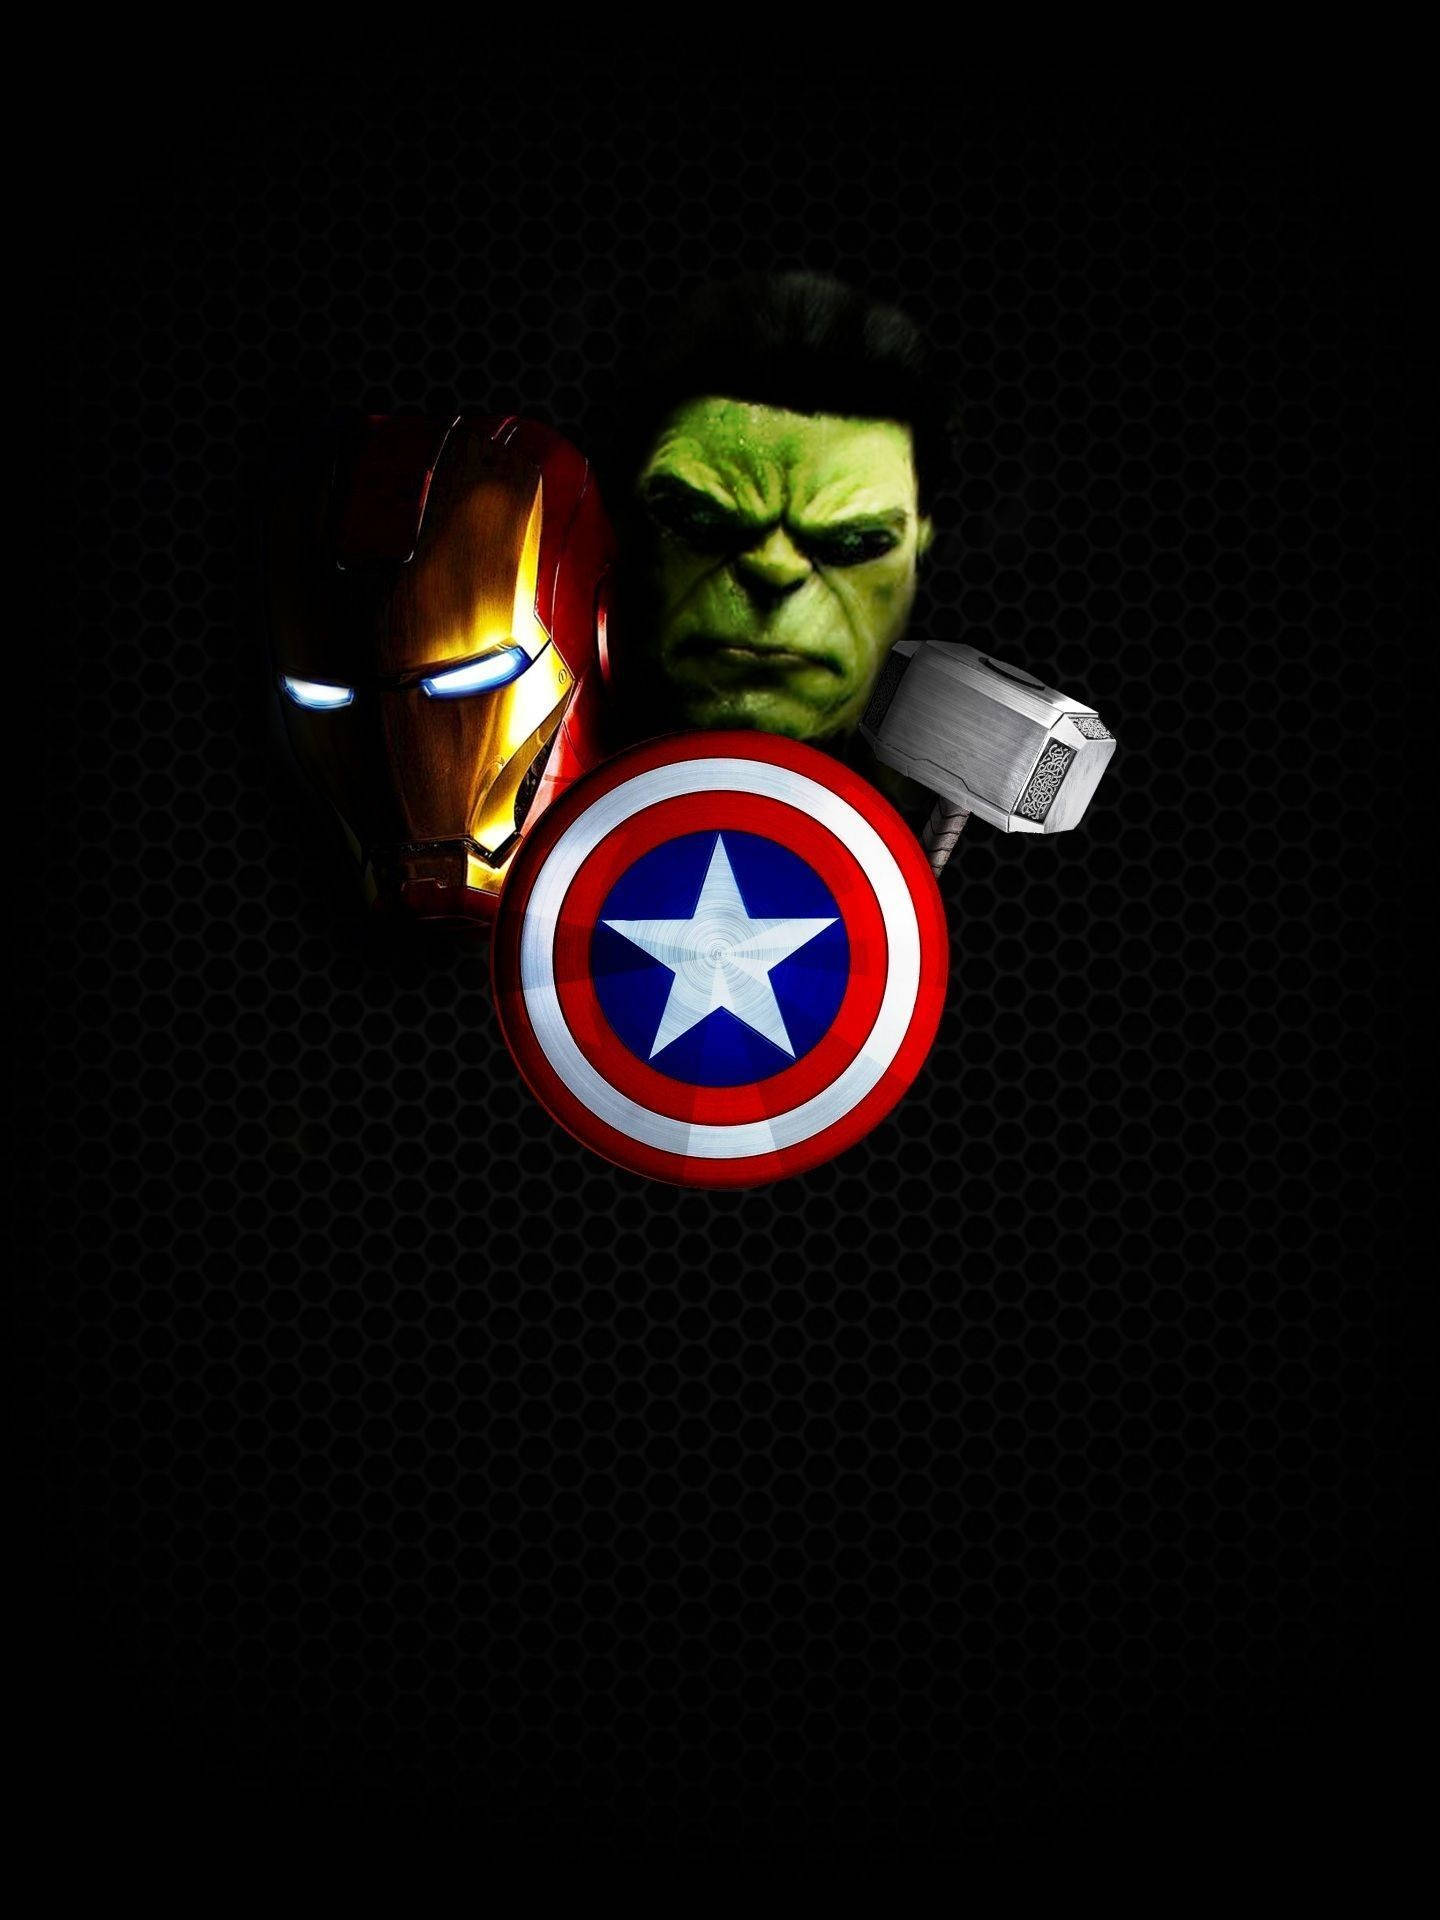 Avengers Power Costume Tumblr Iphone Wallpaper